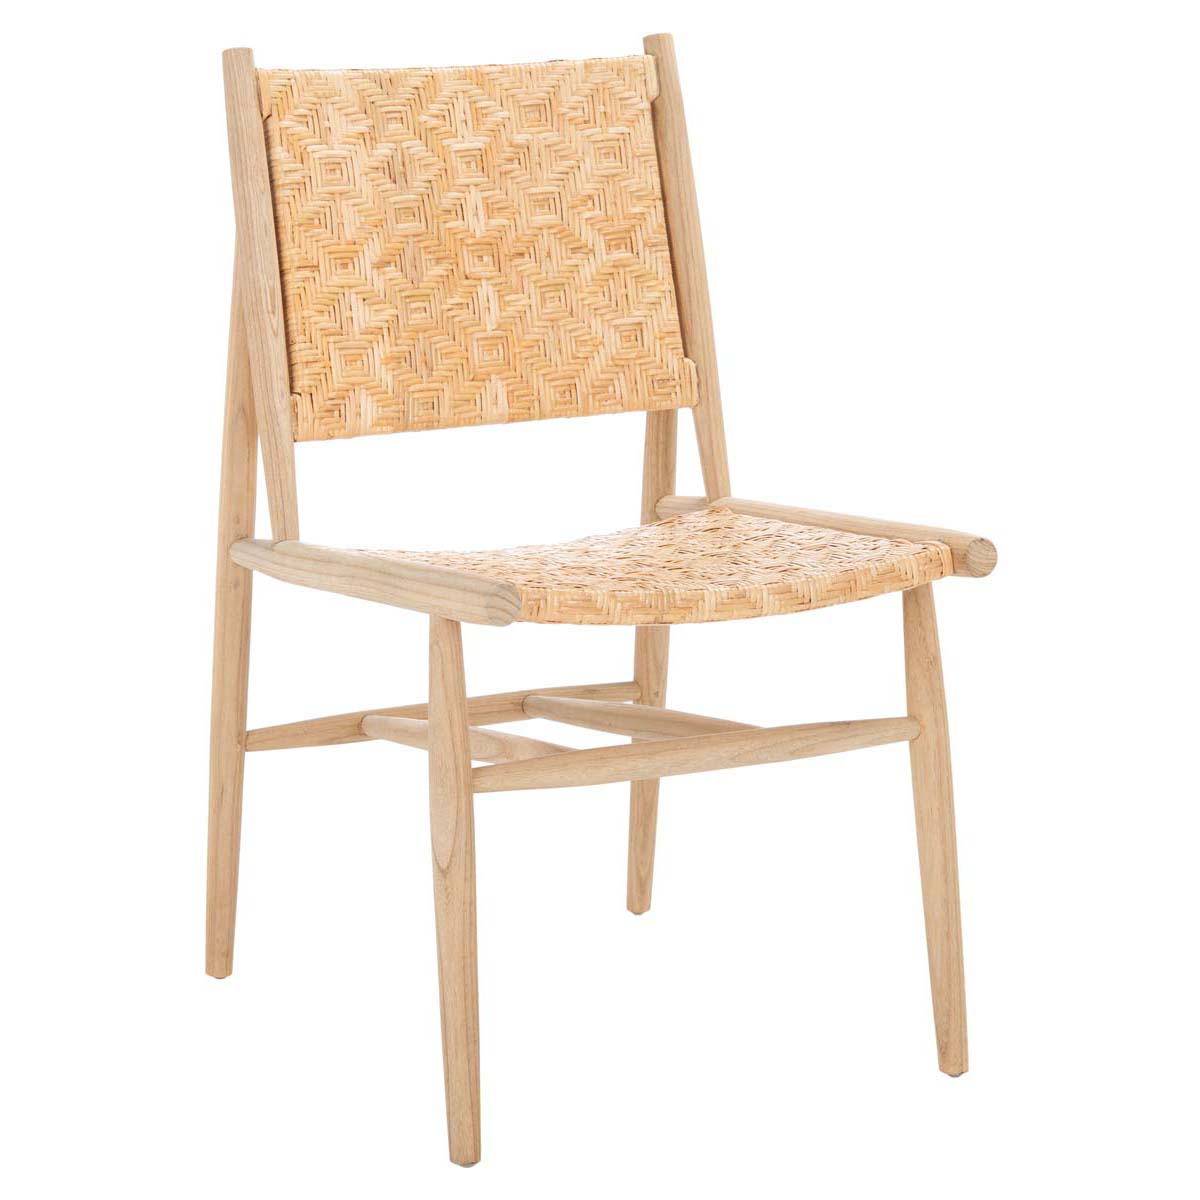 Safavieh Adira Rattan Dining Chair , DCH1202 - Natural (Set of 2)